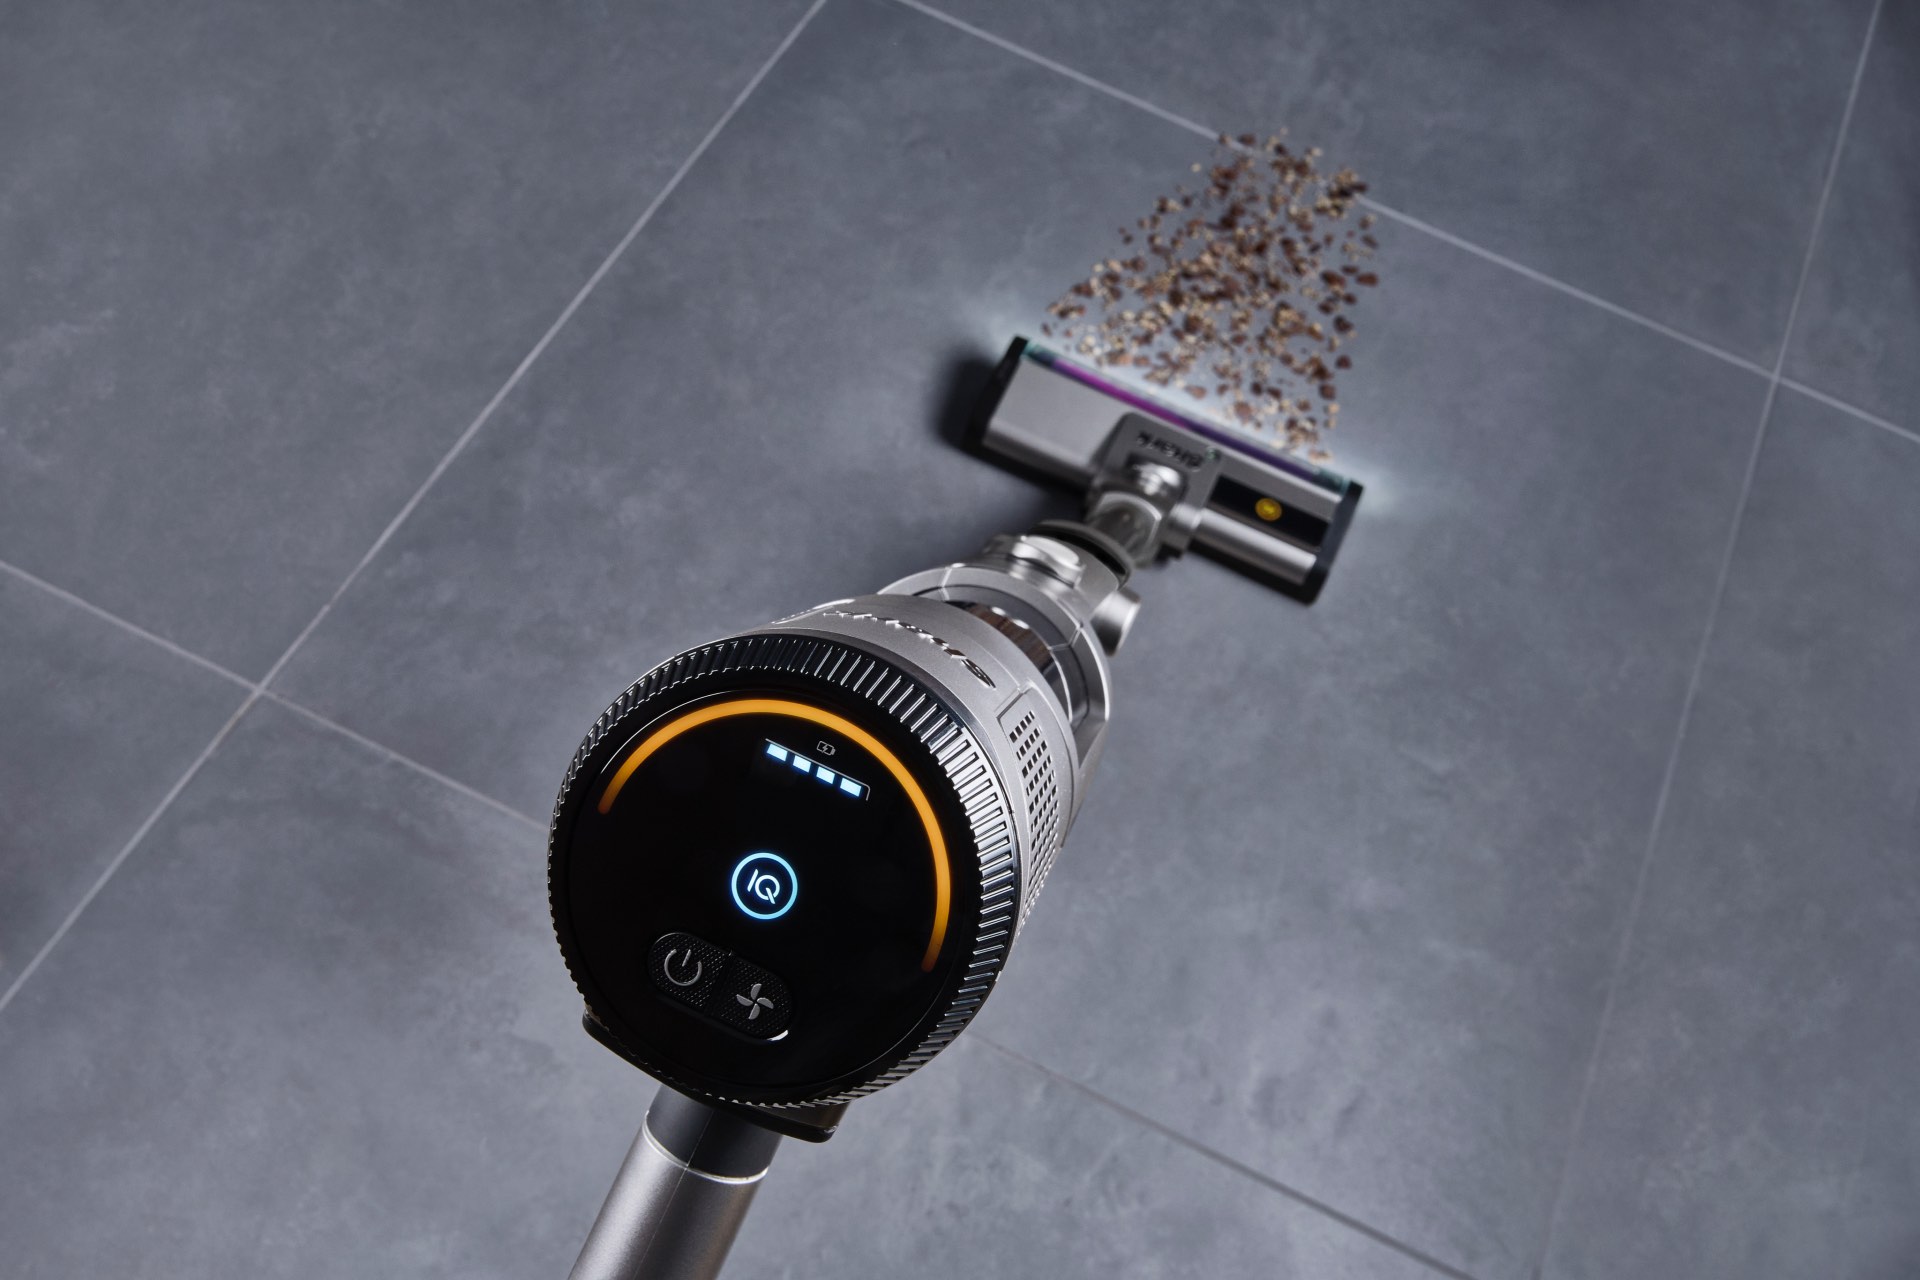 , Product Review: Shark CleanSense IQ+ Cordless Handstick Vacuum